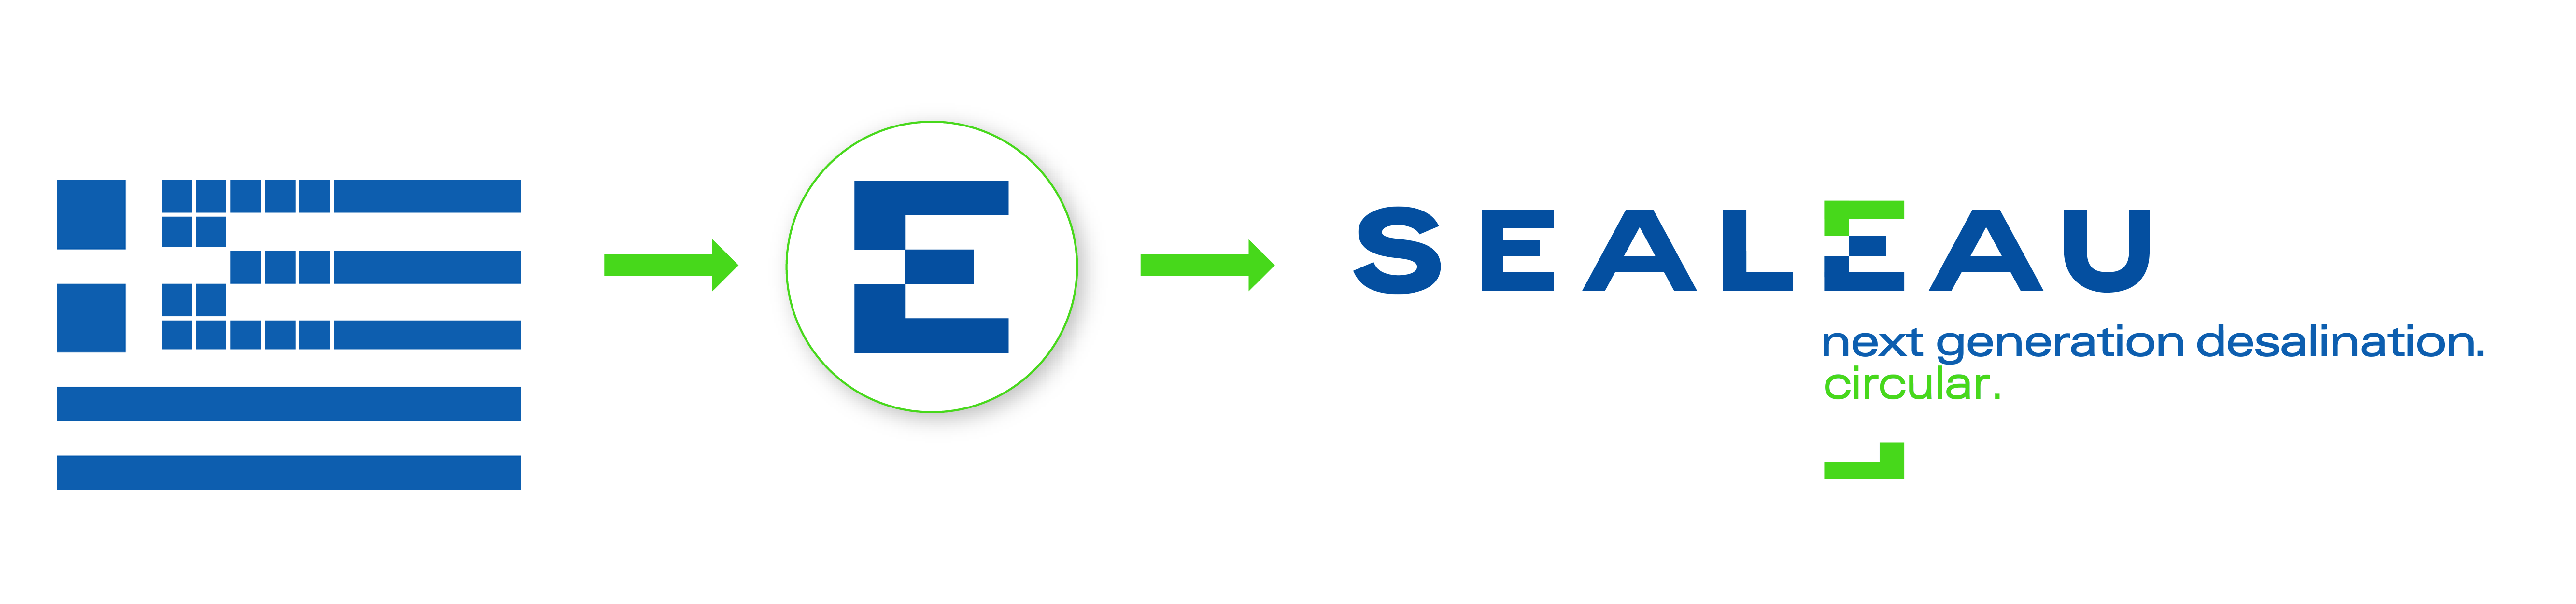 SEALEAU logo explanation